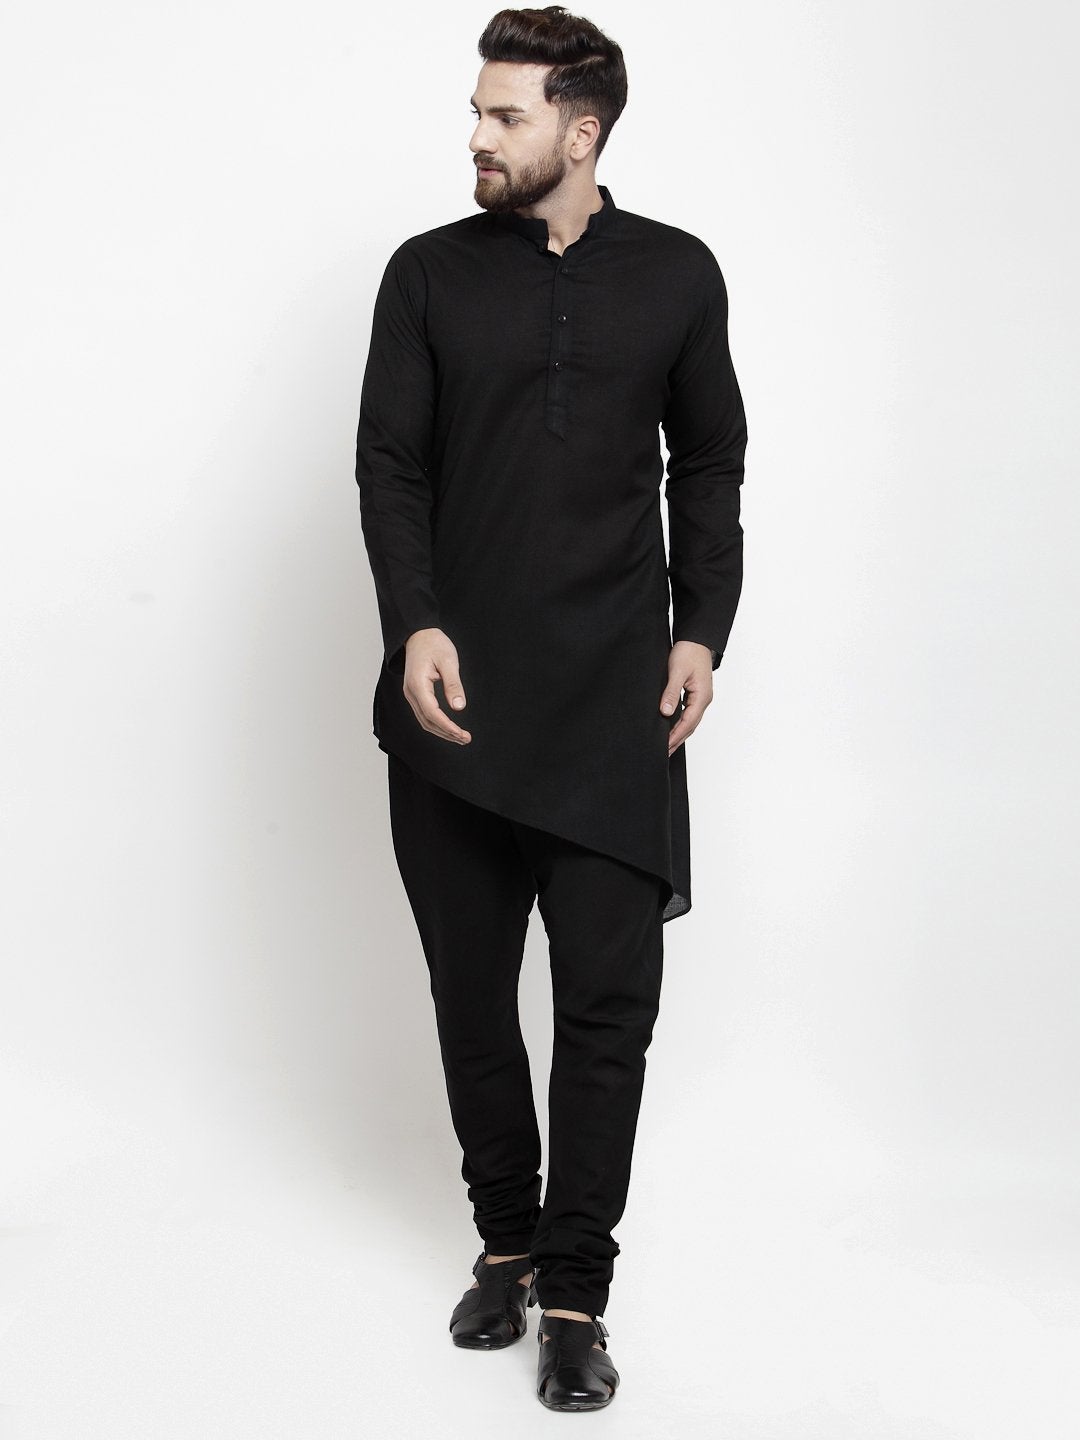 Designer Black Linen Kurta With Churidar Pajama For Men By Treemoda